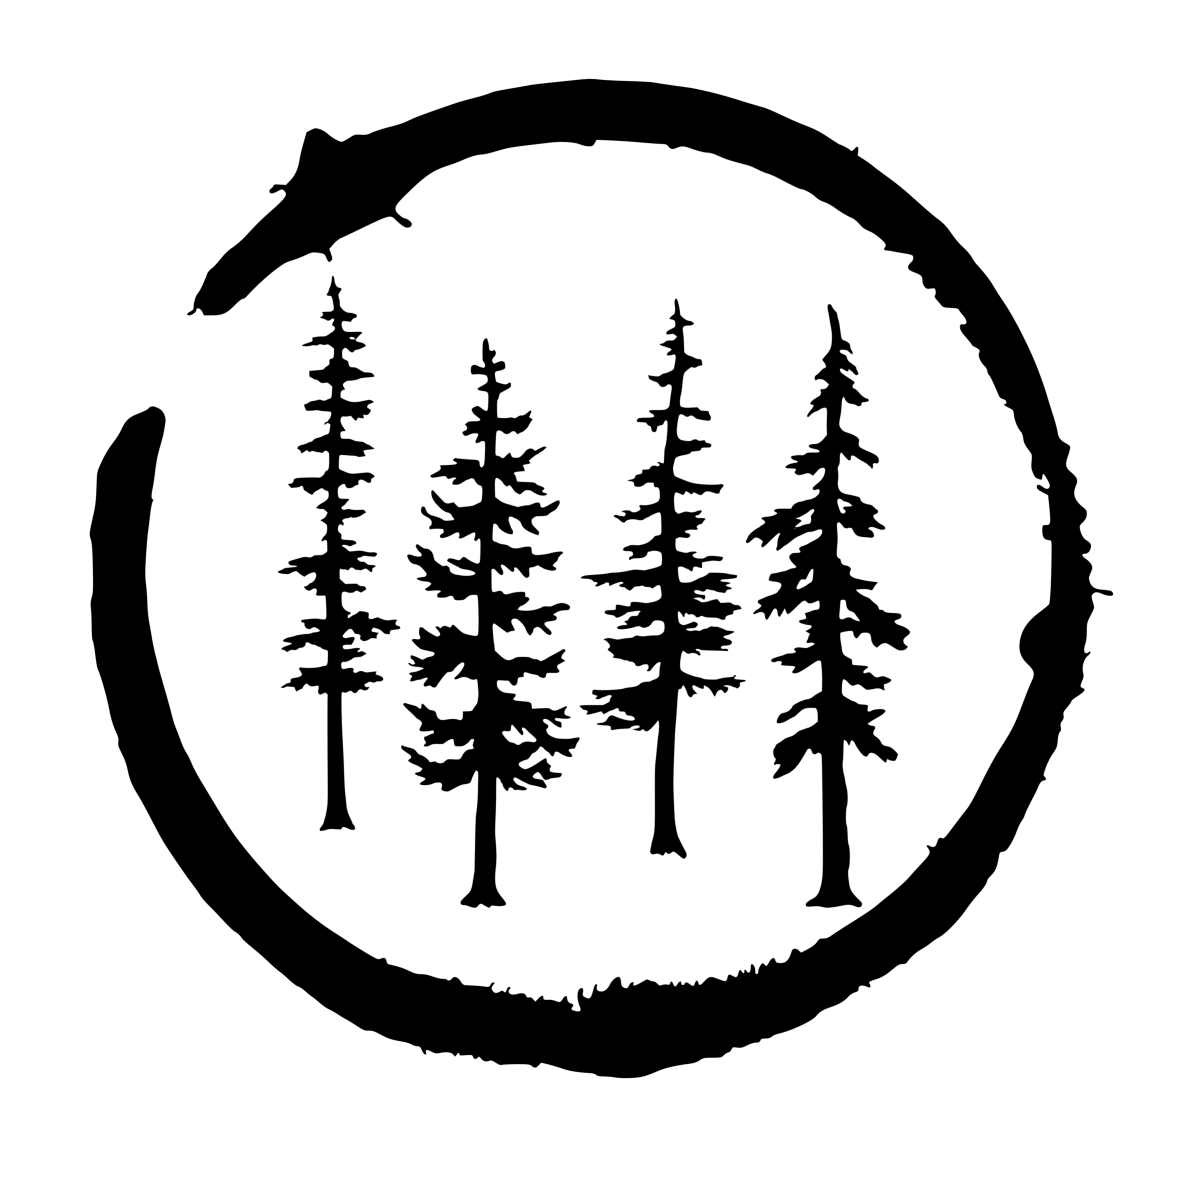 SKINNY TREES CIRCLE - DIGITAL